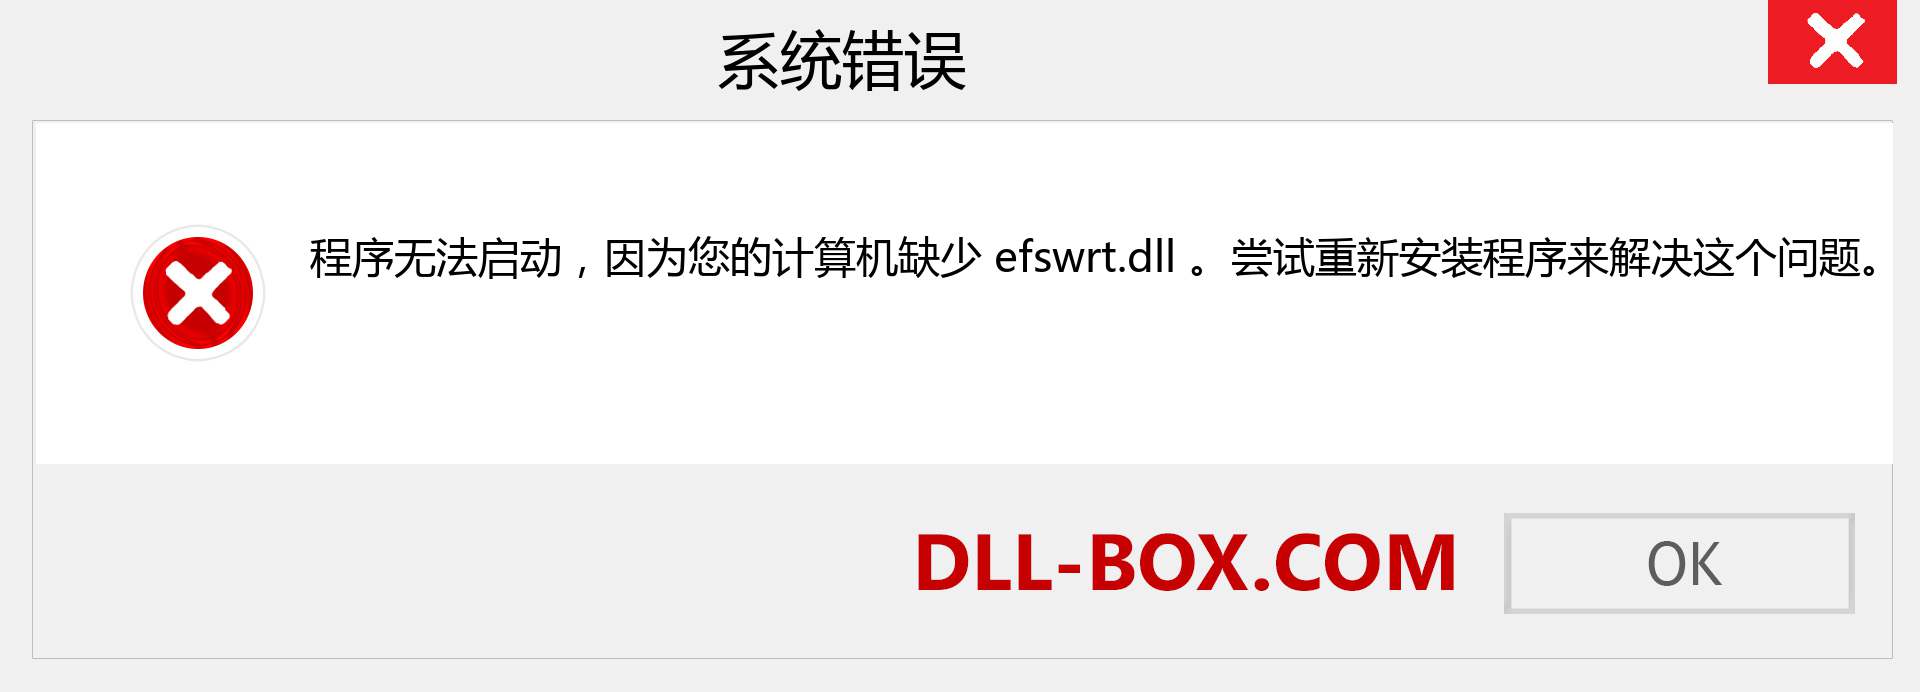 efswrt.dll 文件丢失？。 适用于 Windows 7、8、10 的下载 - 修复 Windows、照片、图像上的 efswrt dll 丢失错误